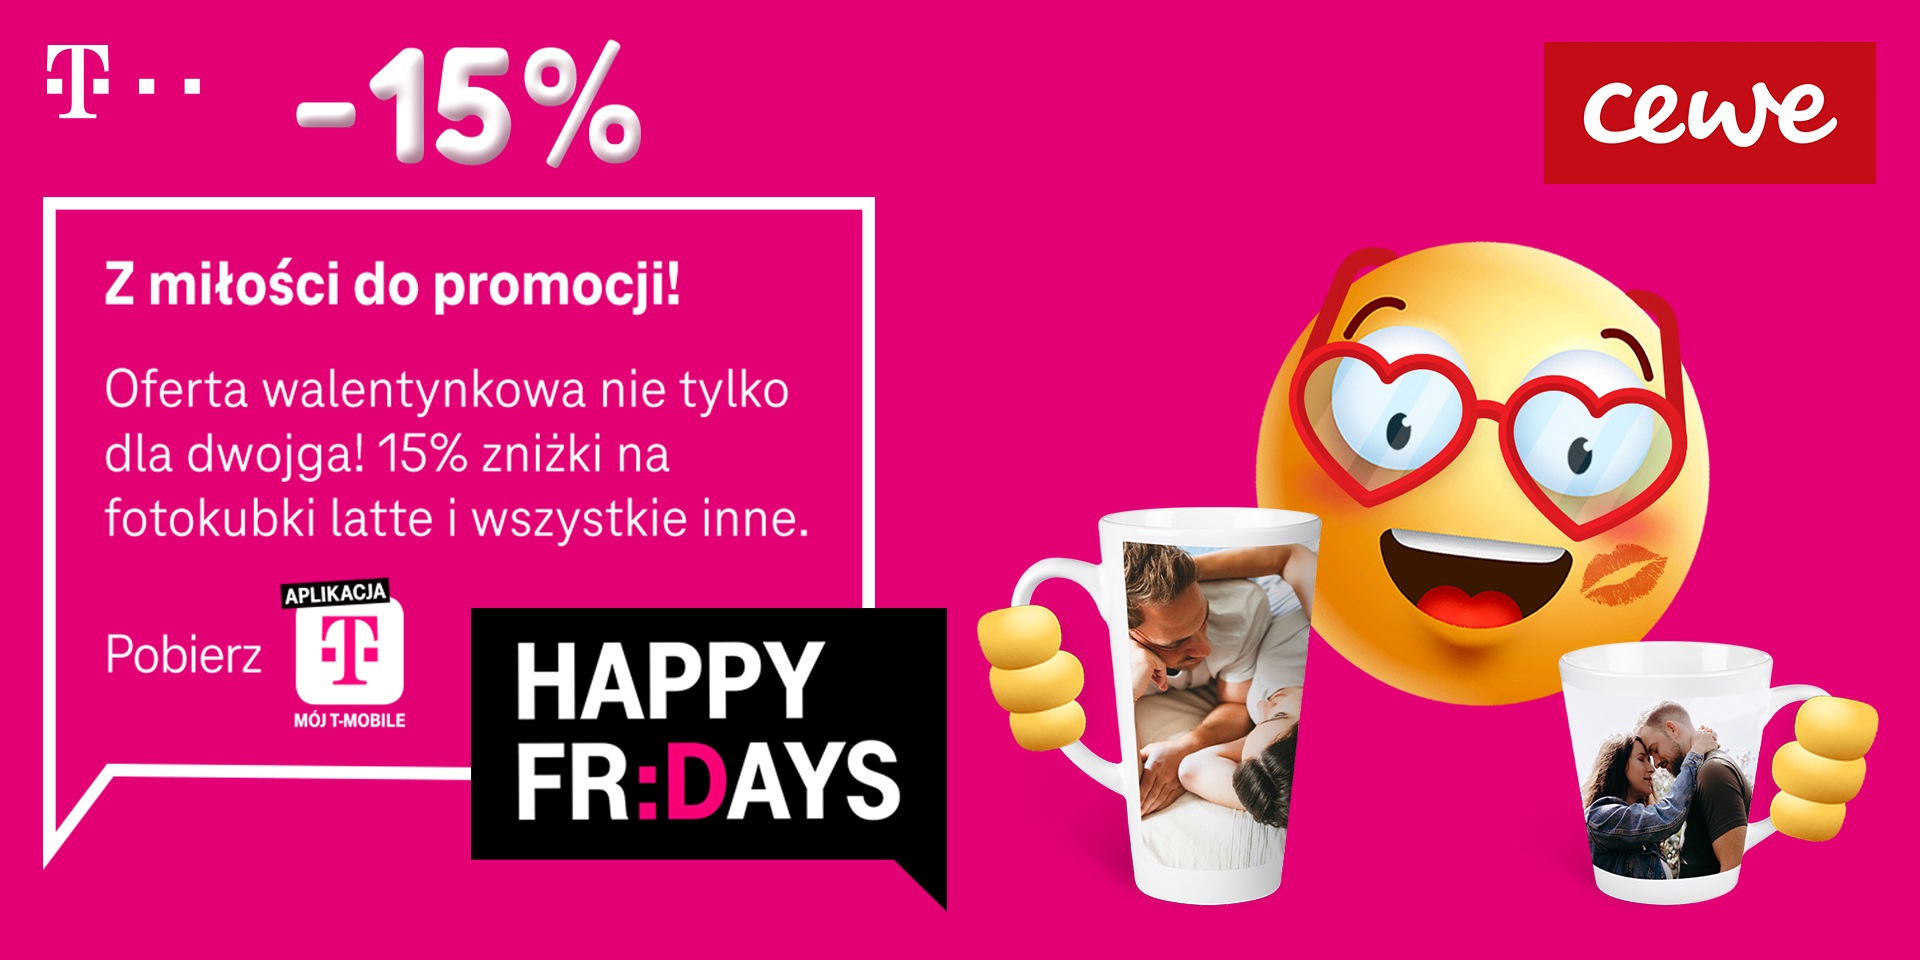 T-Mobile Happy Fridays 28.01.2022 15 procent rabatu na fotokubki CEWE